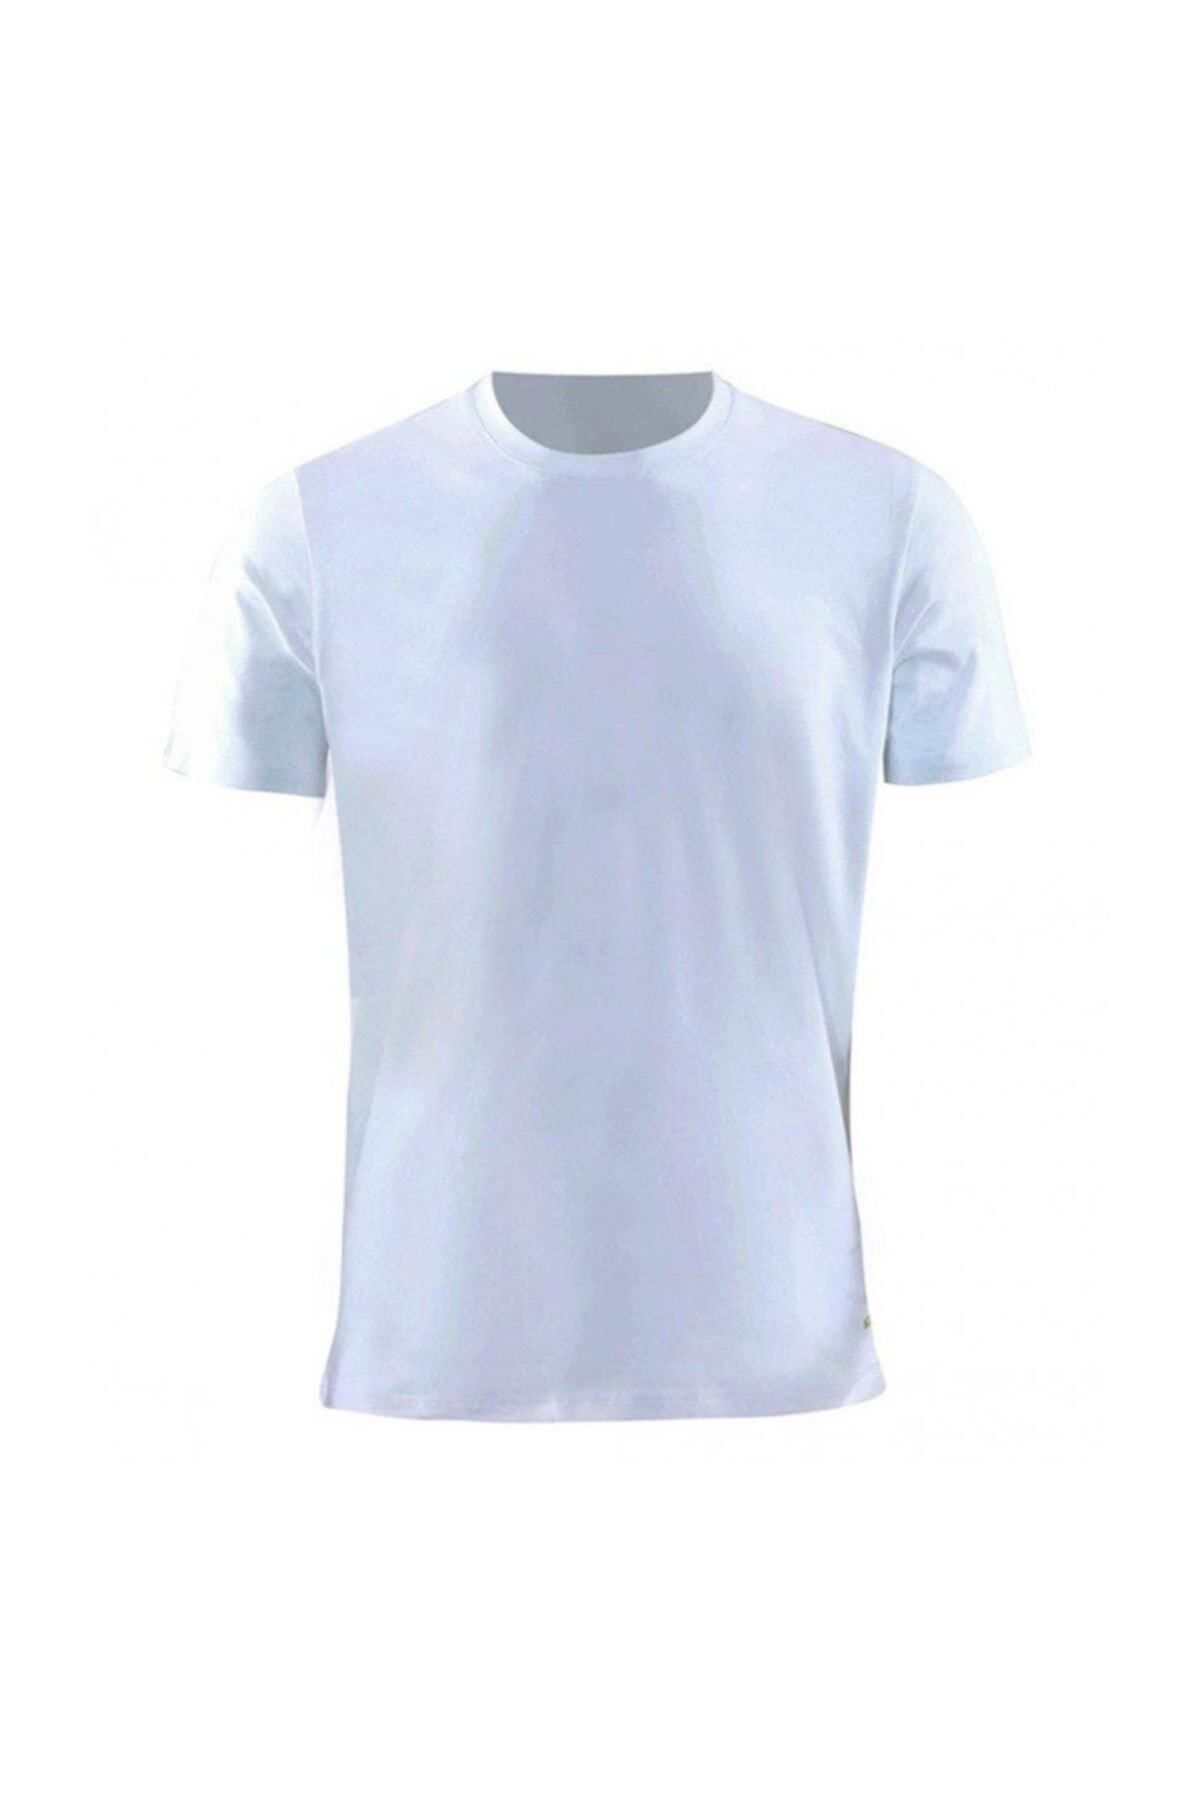 Blackspade Erkek Beyaz Tender Cotton T-Shirt 9235